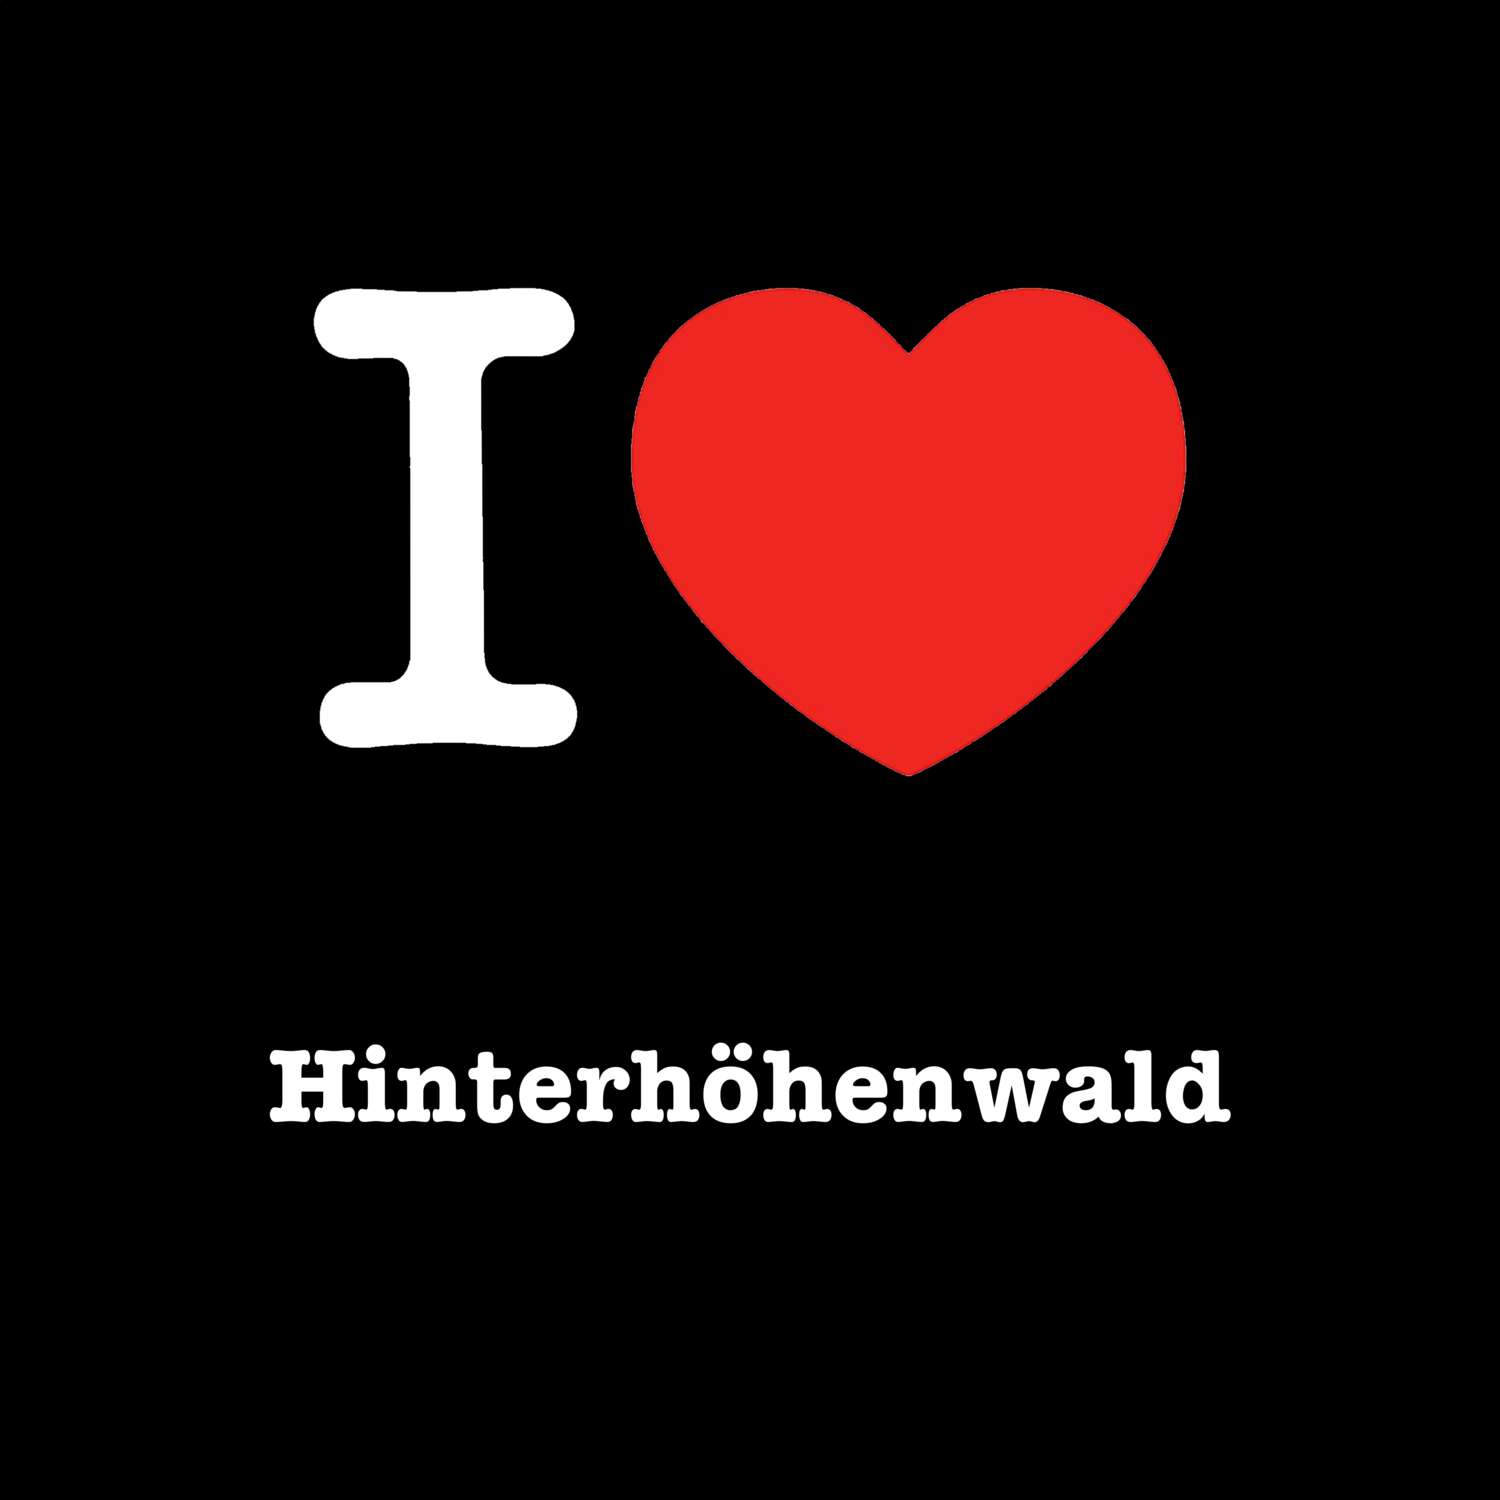 Hinterhöhenwald T-Shirt »I love«